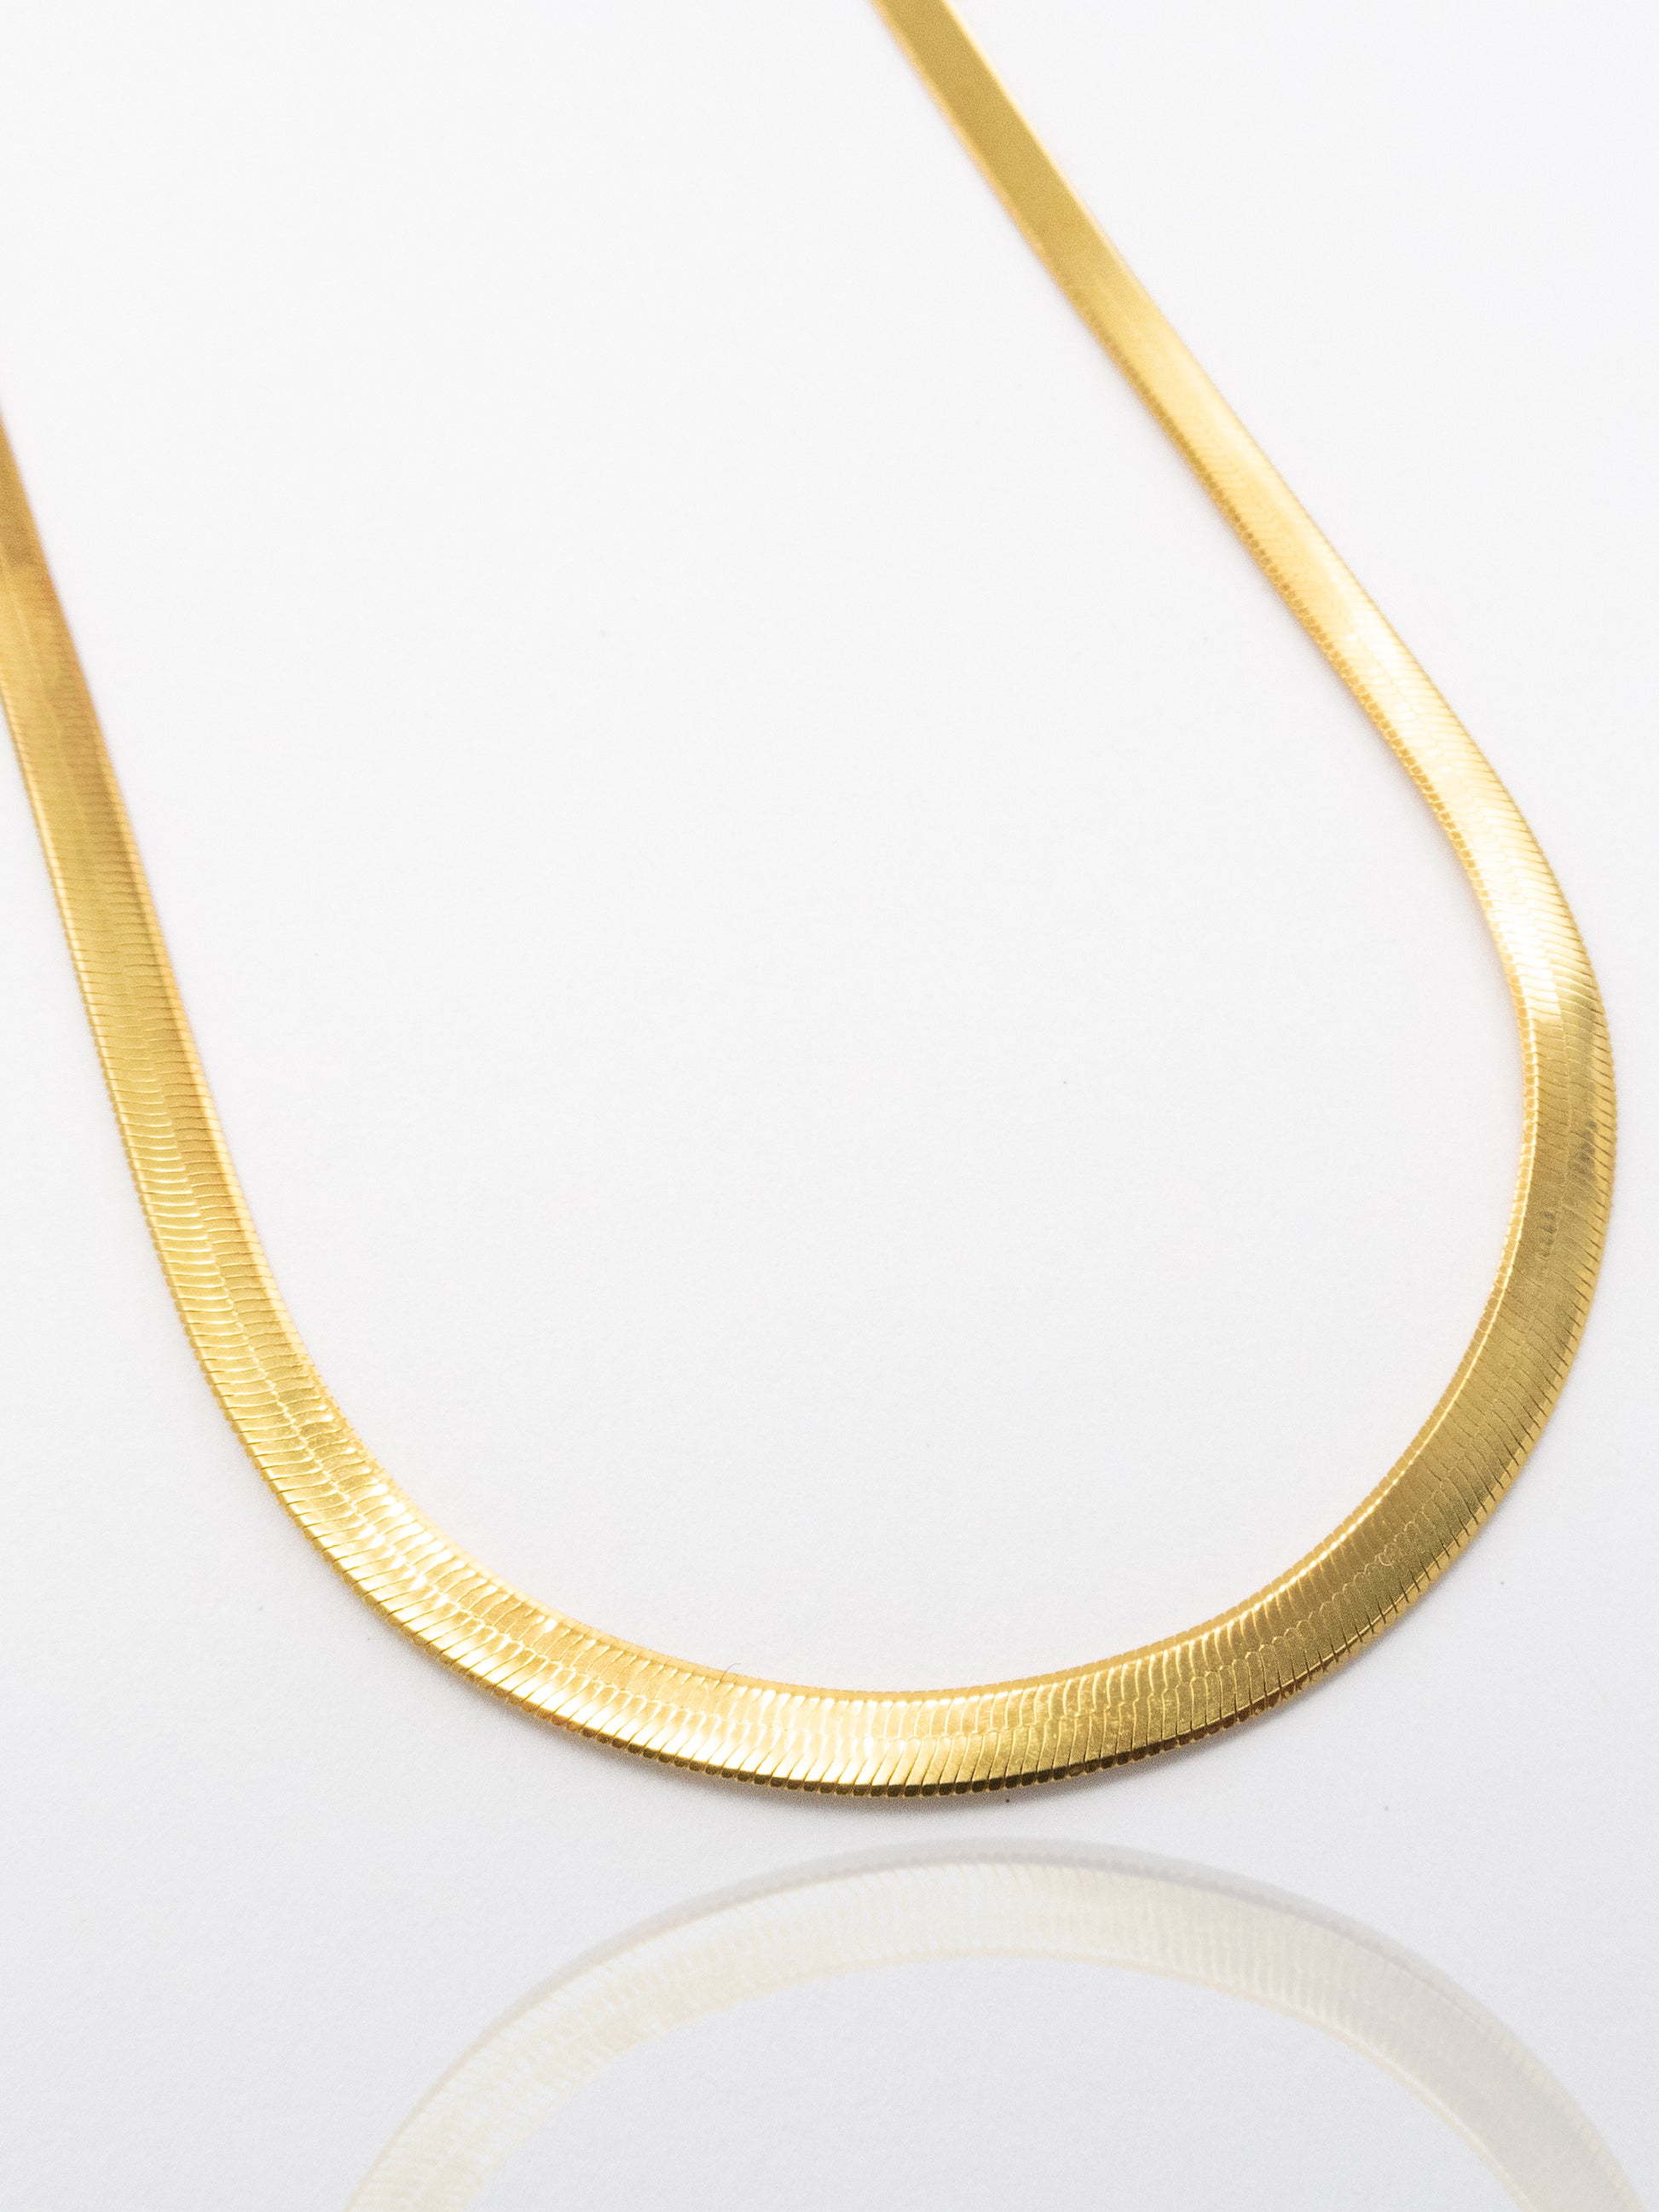 HERRINGBONE CHAIN | 18K Gold - LILÈ - Necklace - LILÈ - online jewellery store - jewelry online - affordable jewellery online Australia